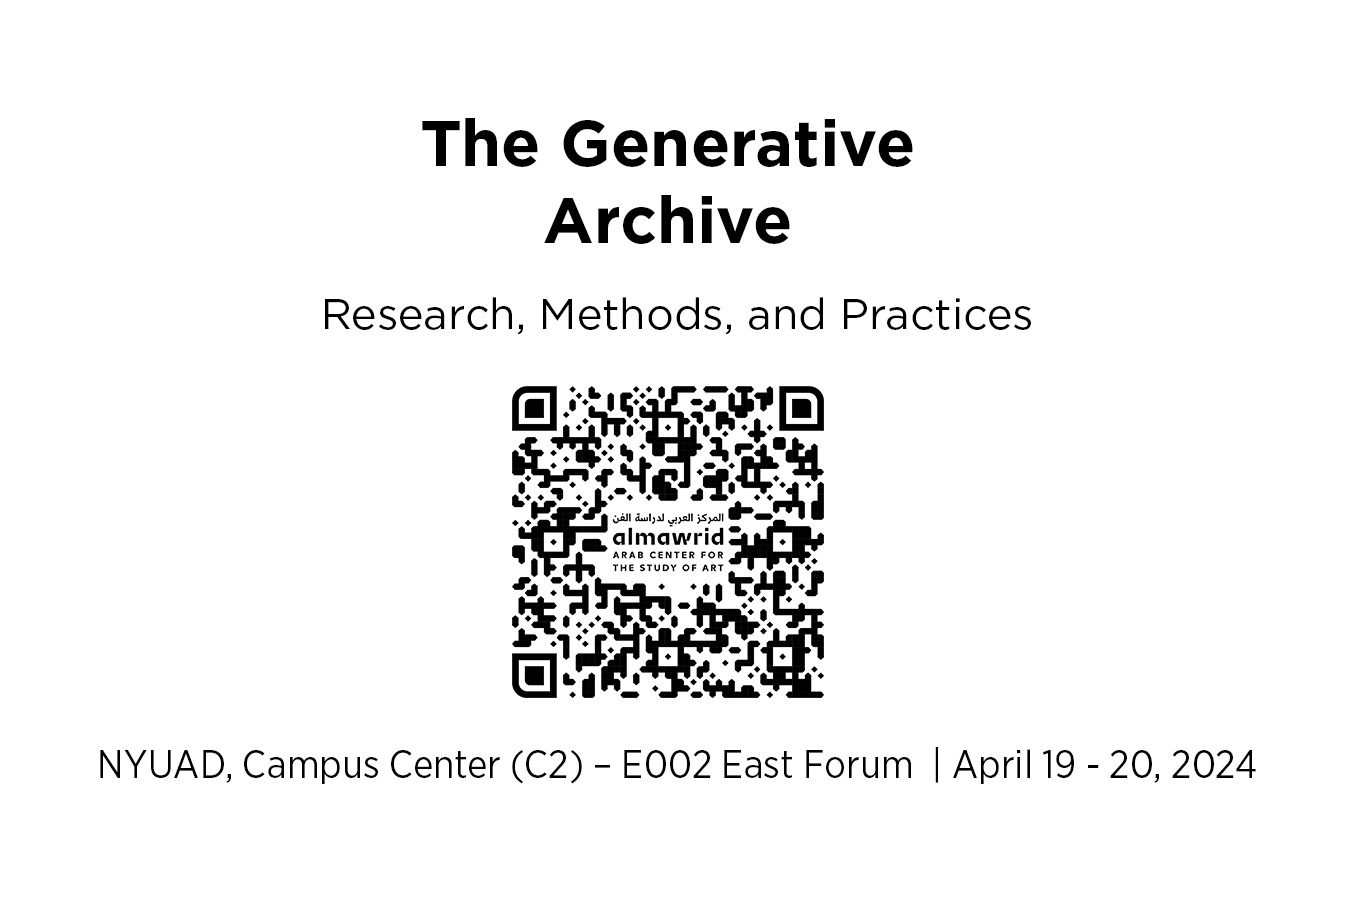 Symposium: The Generative Archive